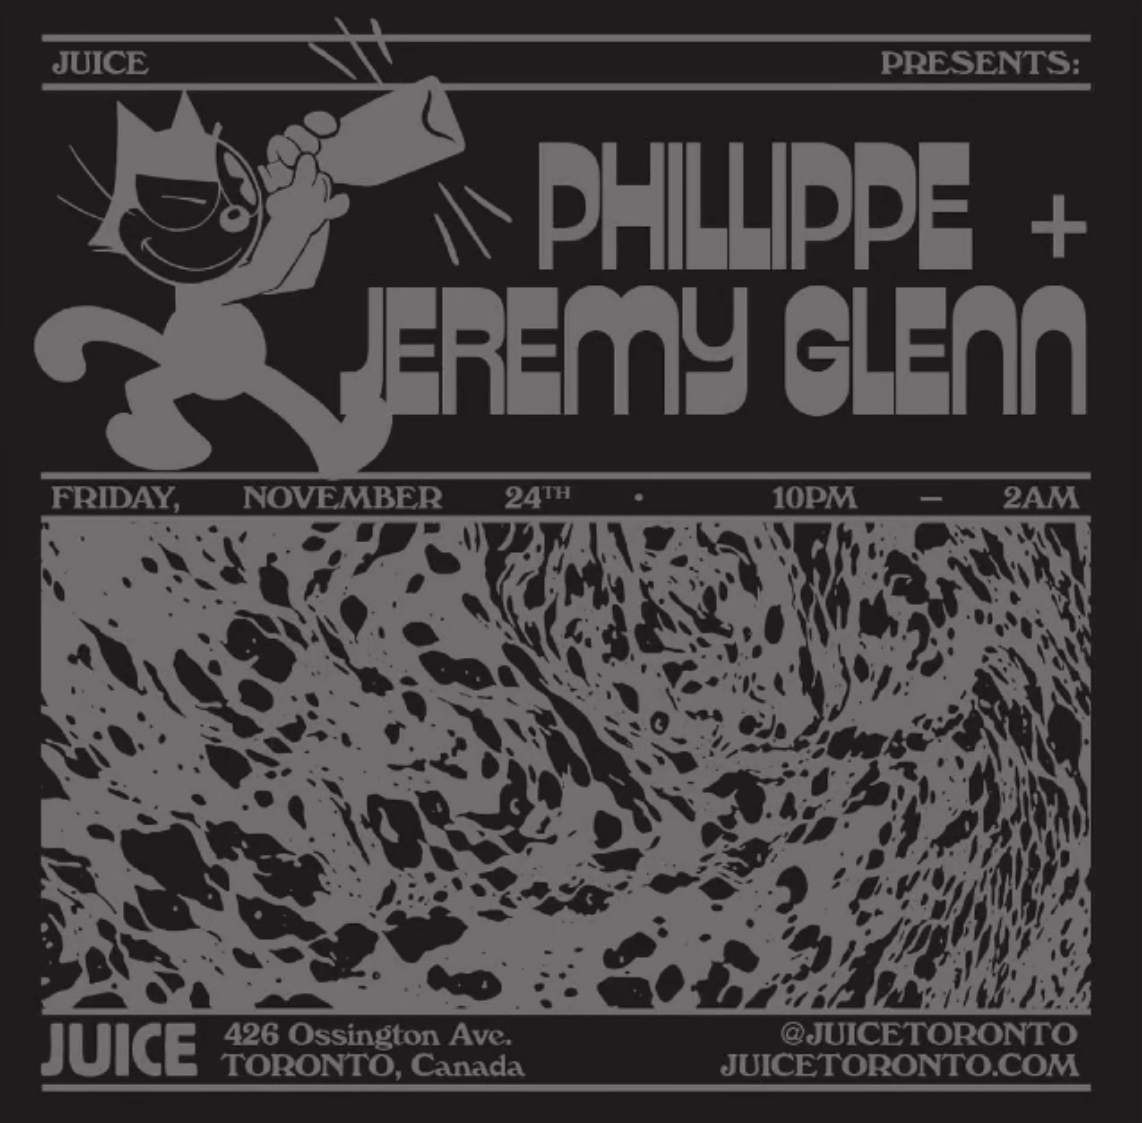 Juice presents Phillippe and Jeremy Glenn - フライヤー表